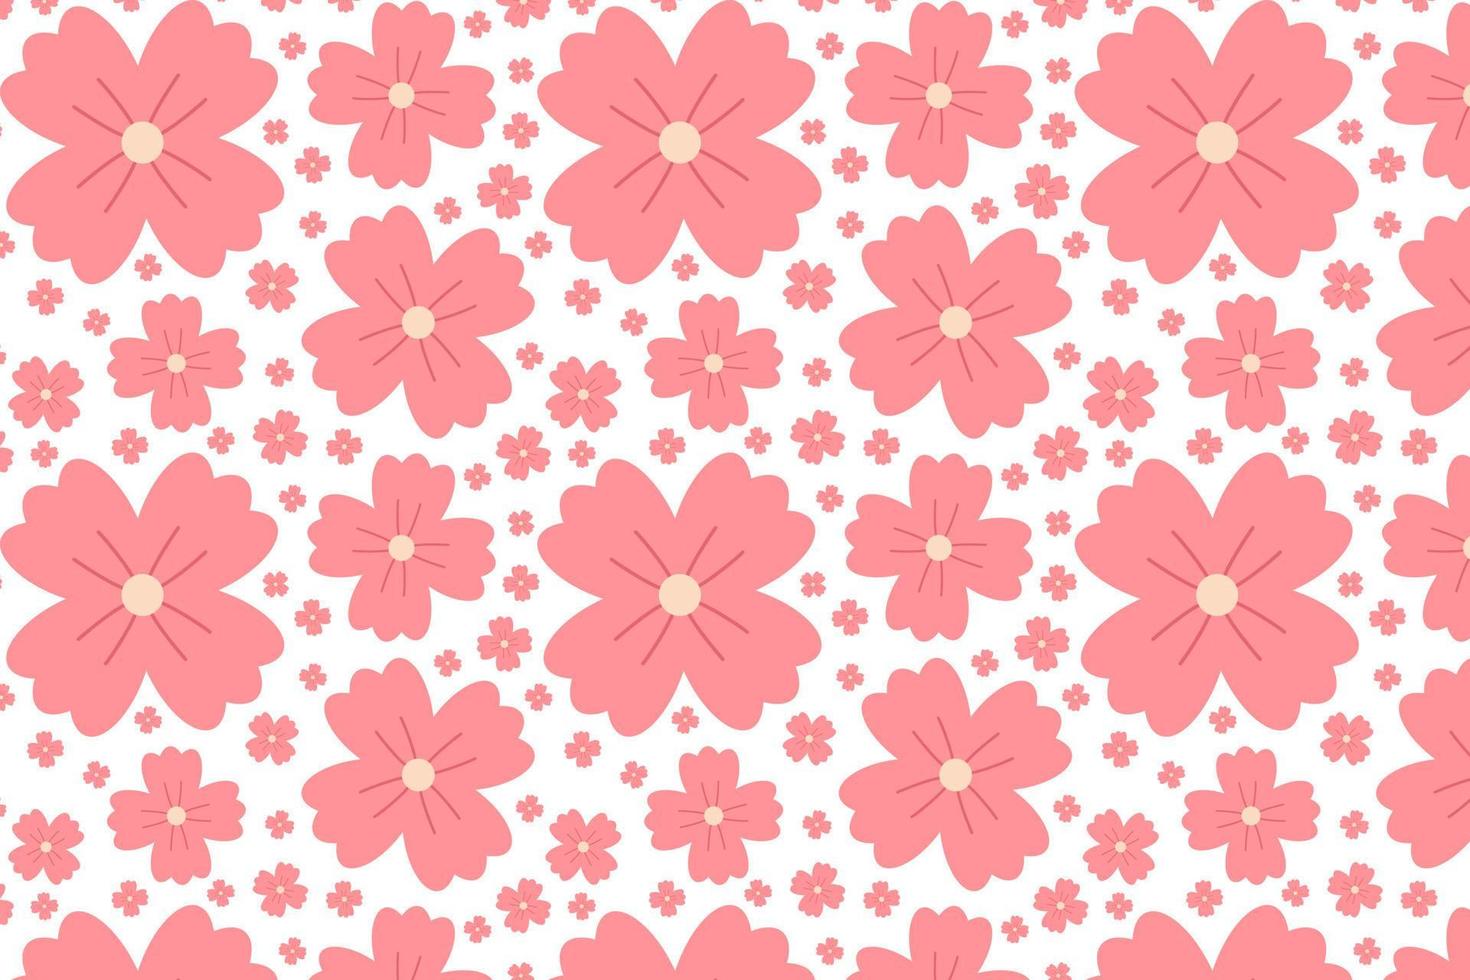 sin costura primavera floral modelo con linda rosado flores hermosa flor con cuatro pétalos botánico ornamento. naturaleza antecedentes para tela, textiles, papel, ropa. vector plano dibujos animados ilustración